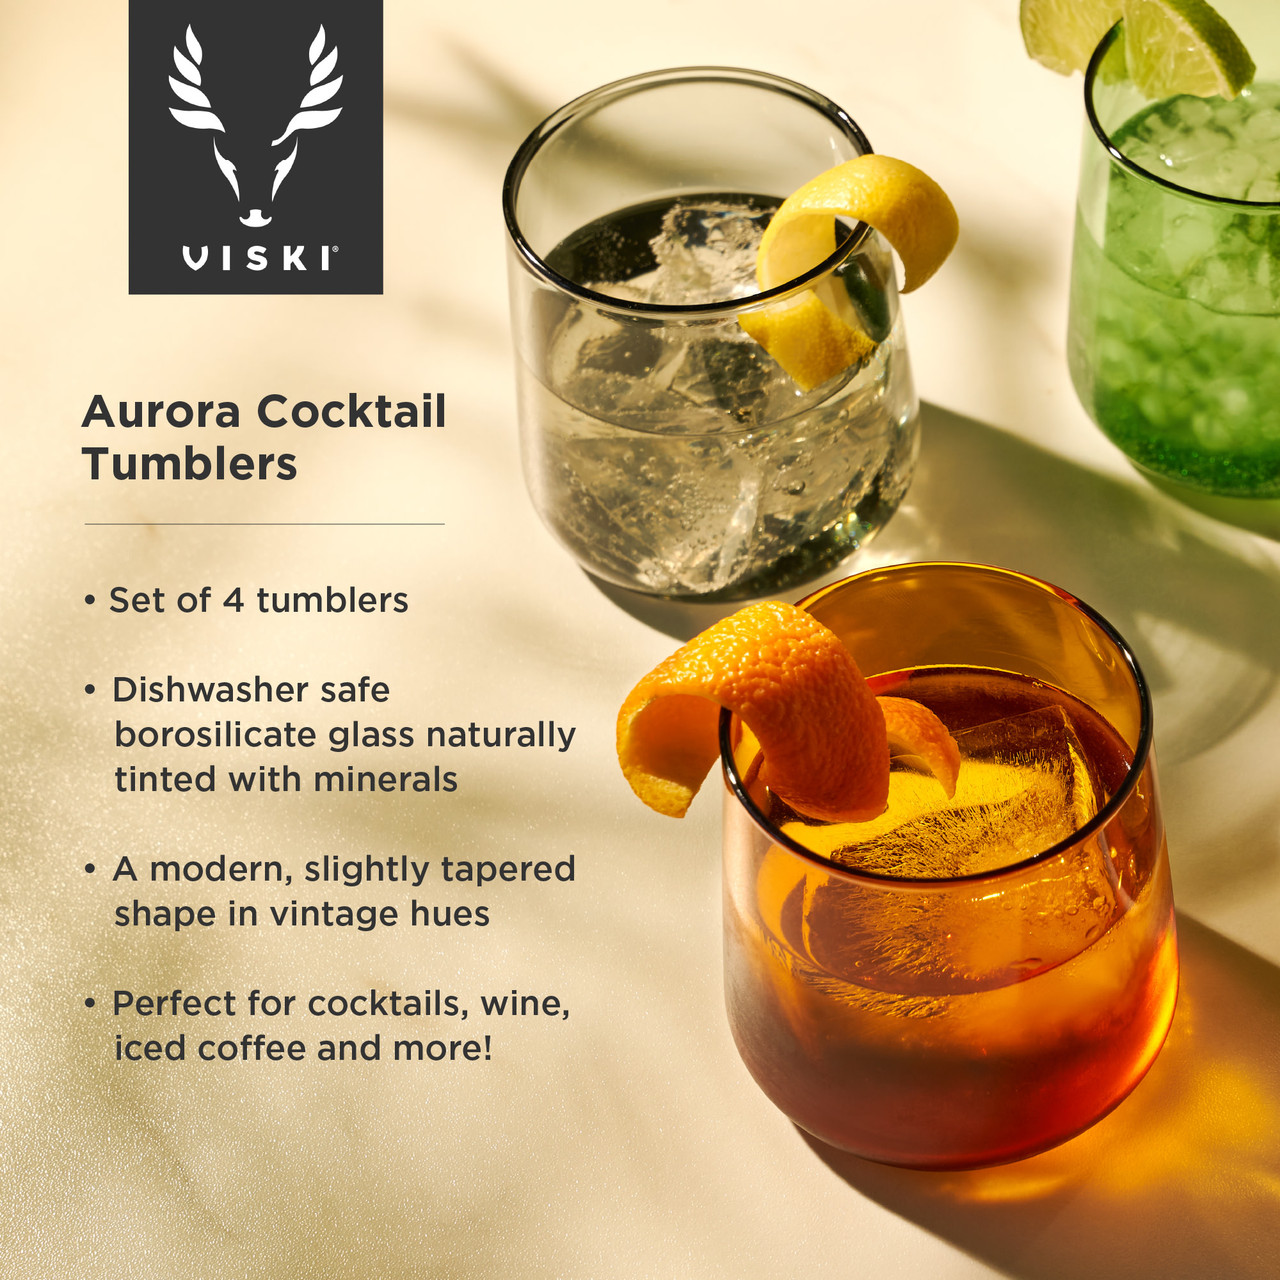 Aurora Cocktail Tumblers by Viski